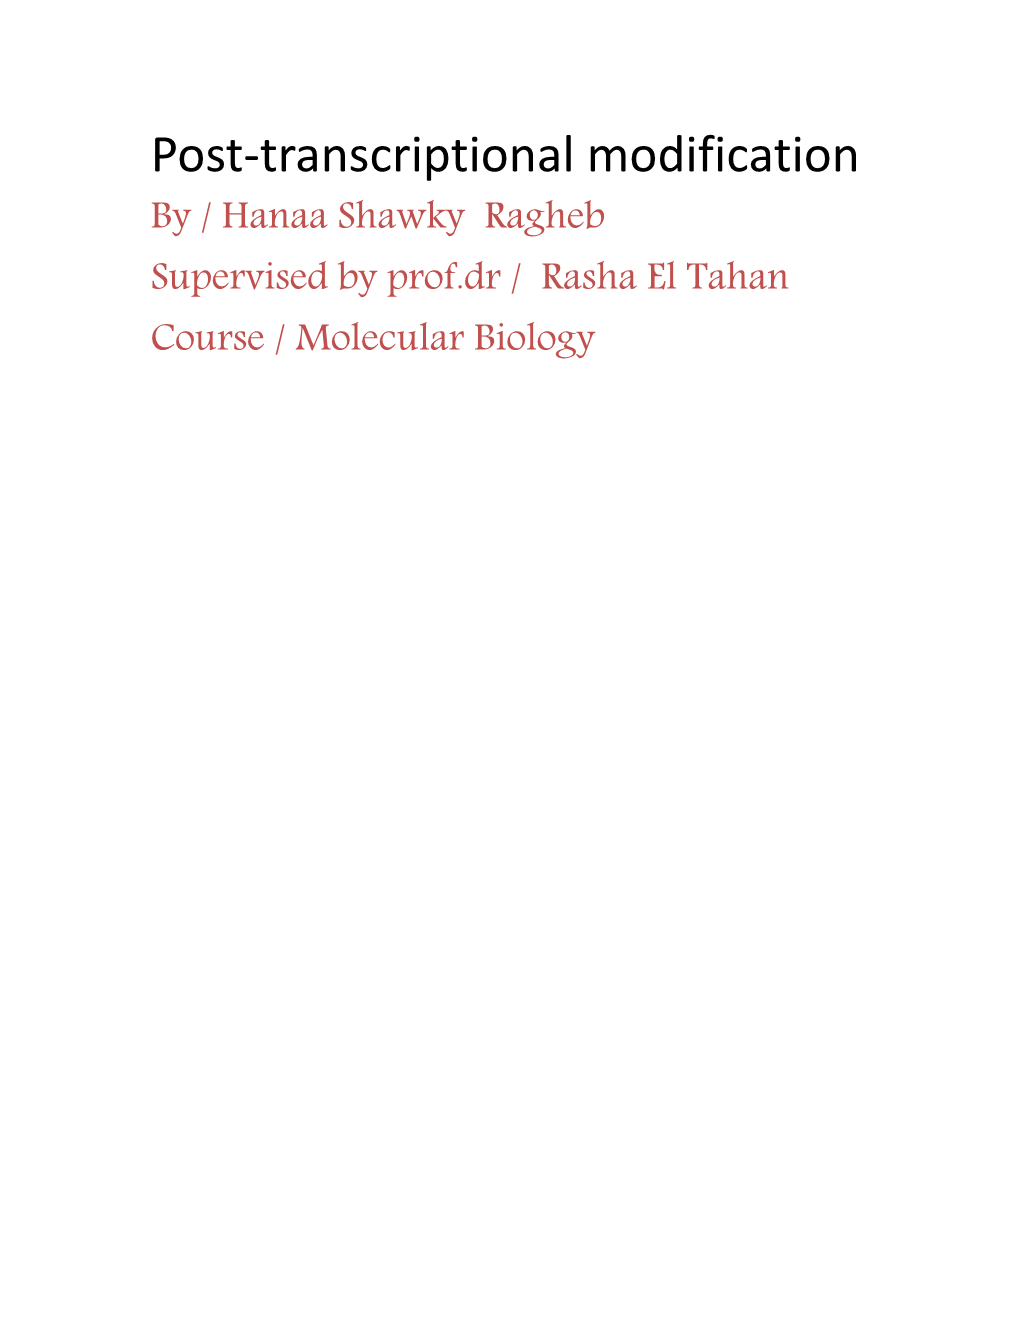 Post-Transcriptional Modification by / Hanaa Shawky Ragheb Supervised by Prof.Dr / Rasha El Tahan Course / Molecular Biology